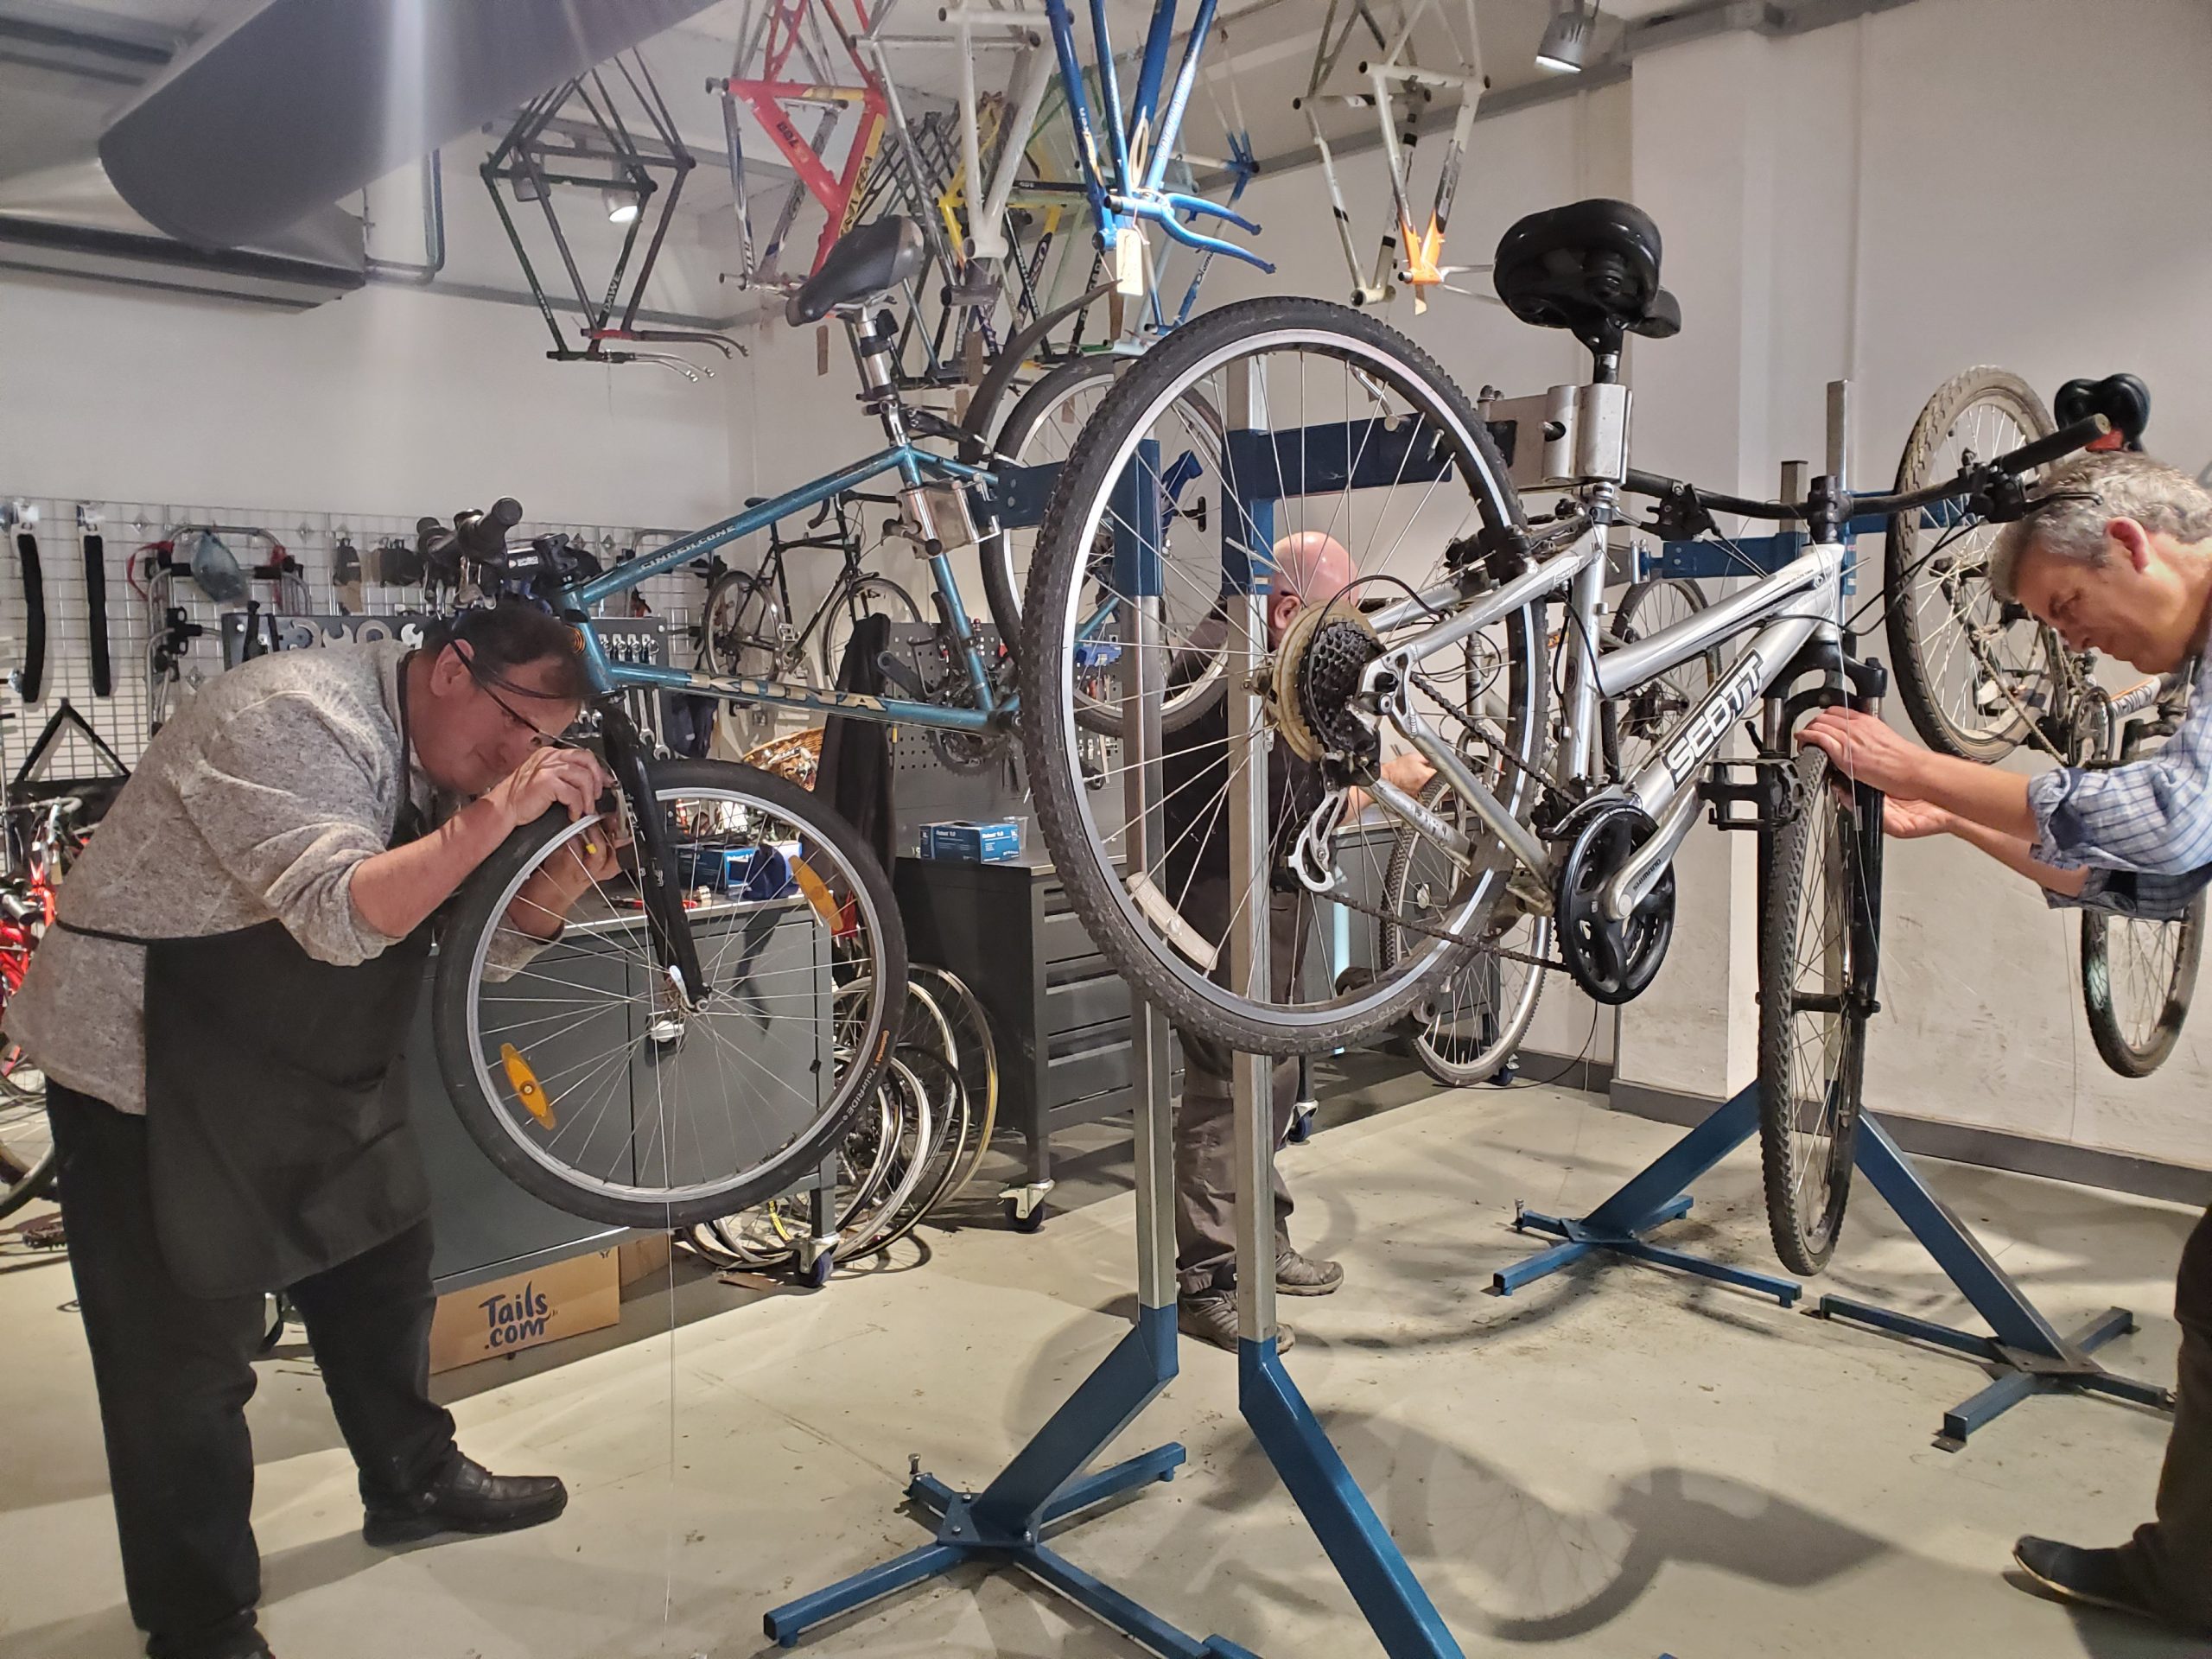 Bike Maintenance workshops